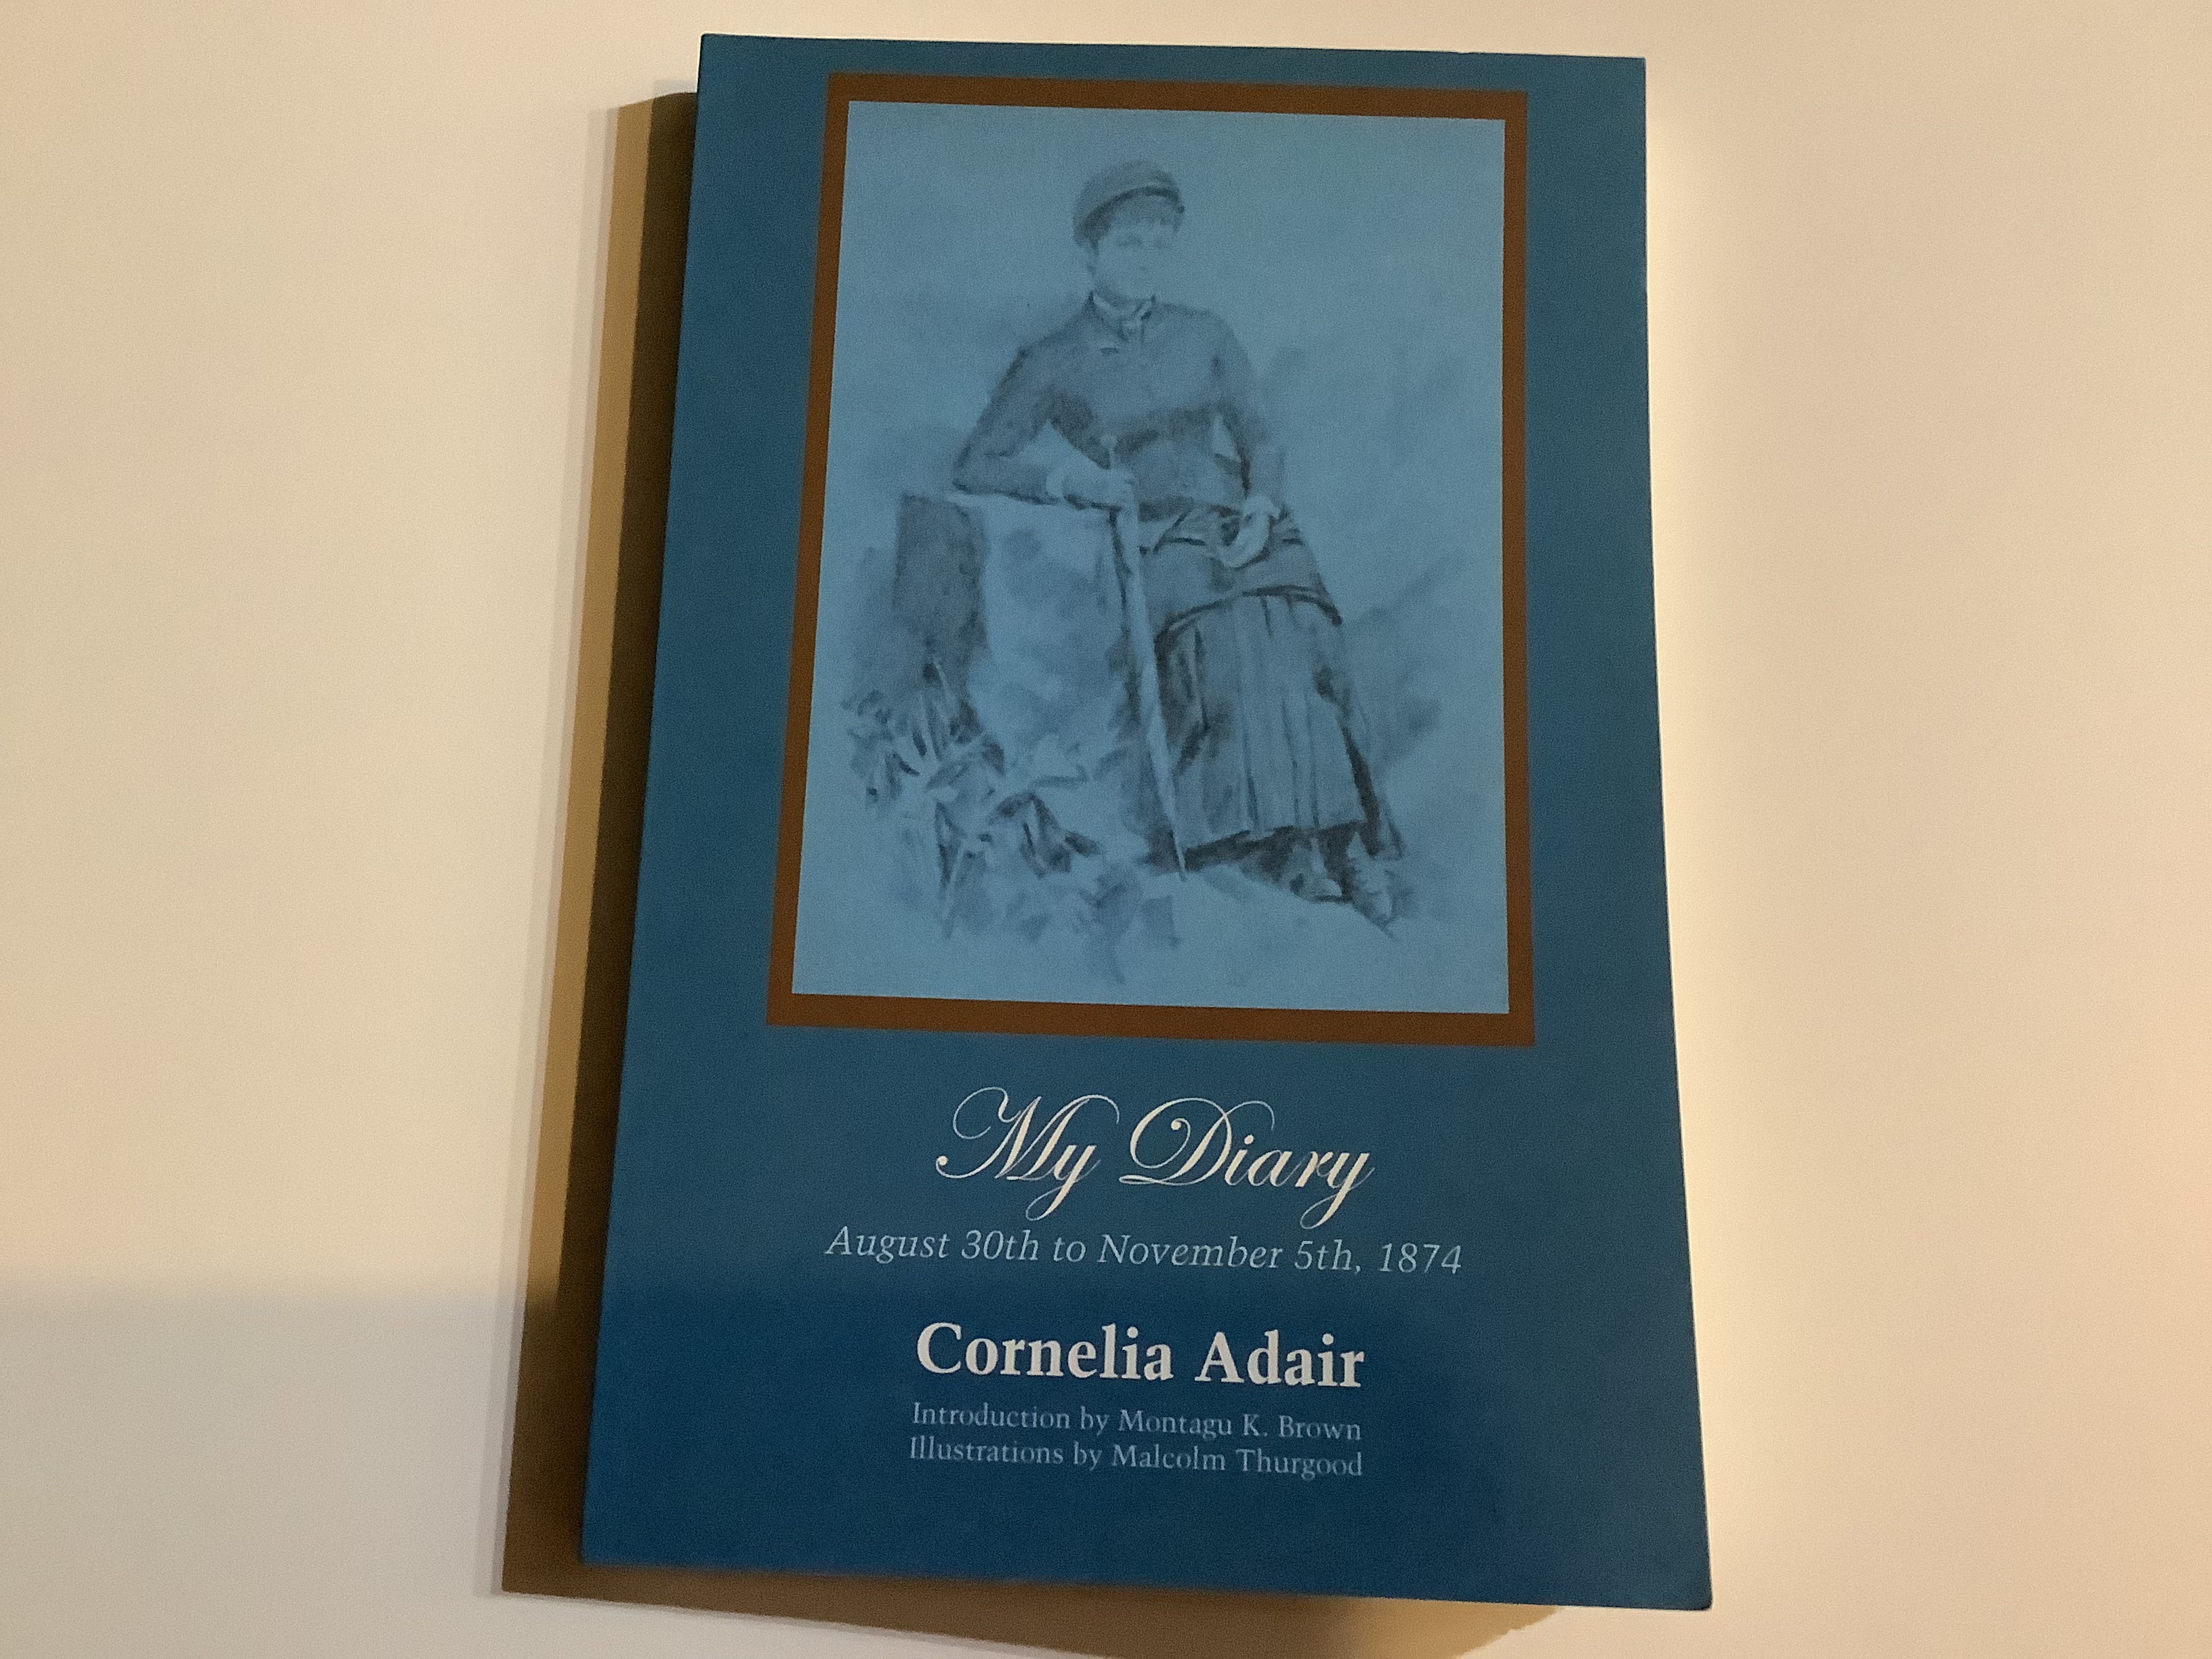 BOOKS - My Diary by Cornelia Adair